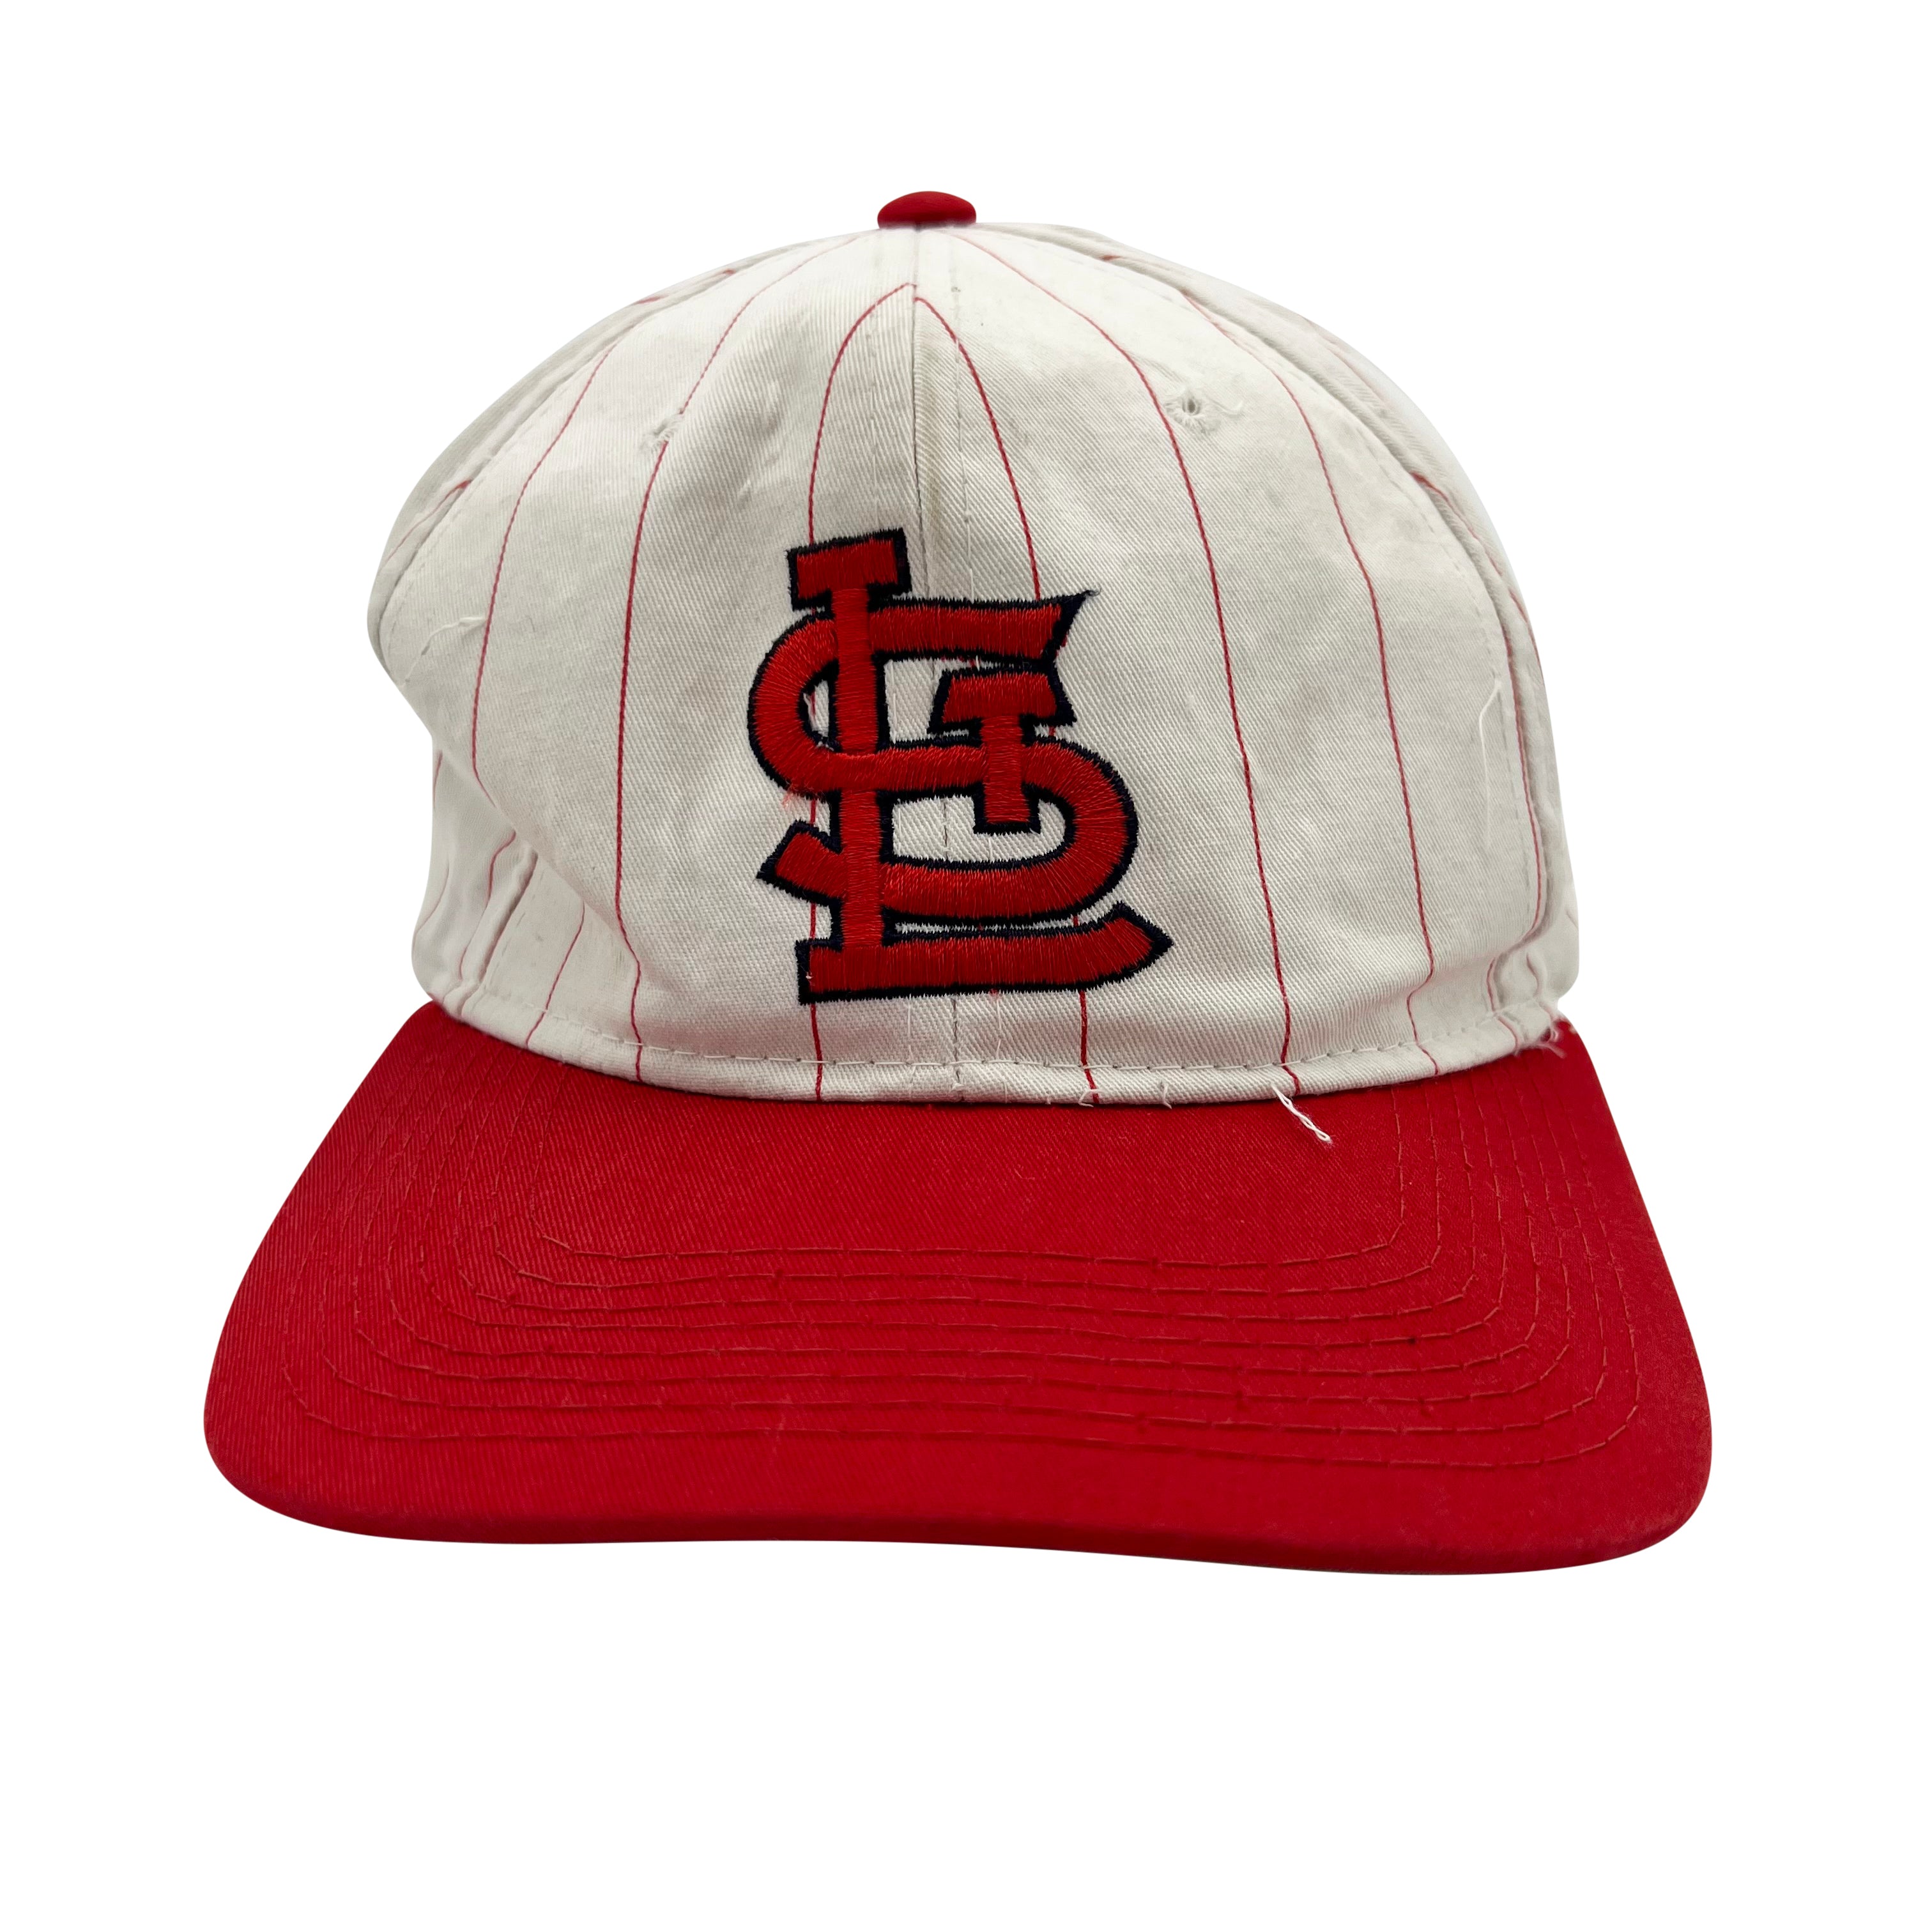 Vintage MLB St. Louis Cardinals Snap-Back Hat - Adult OSFA